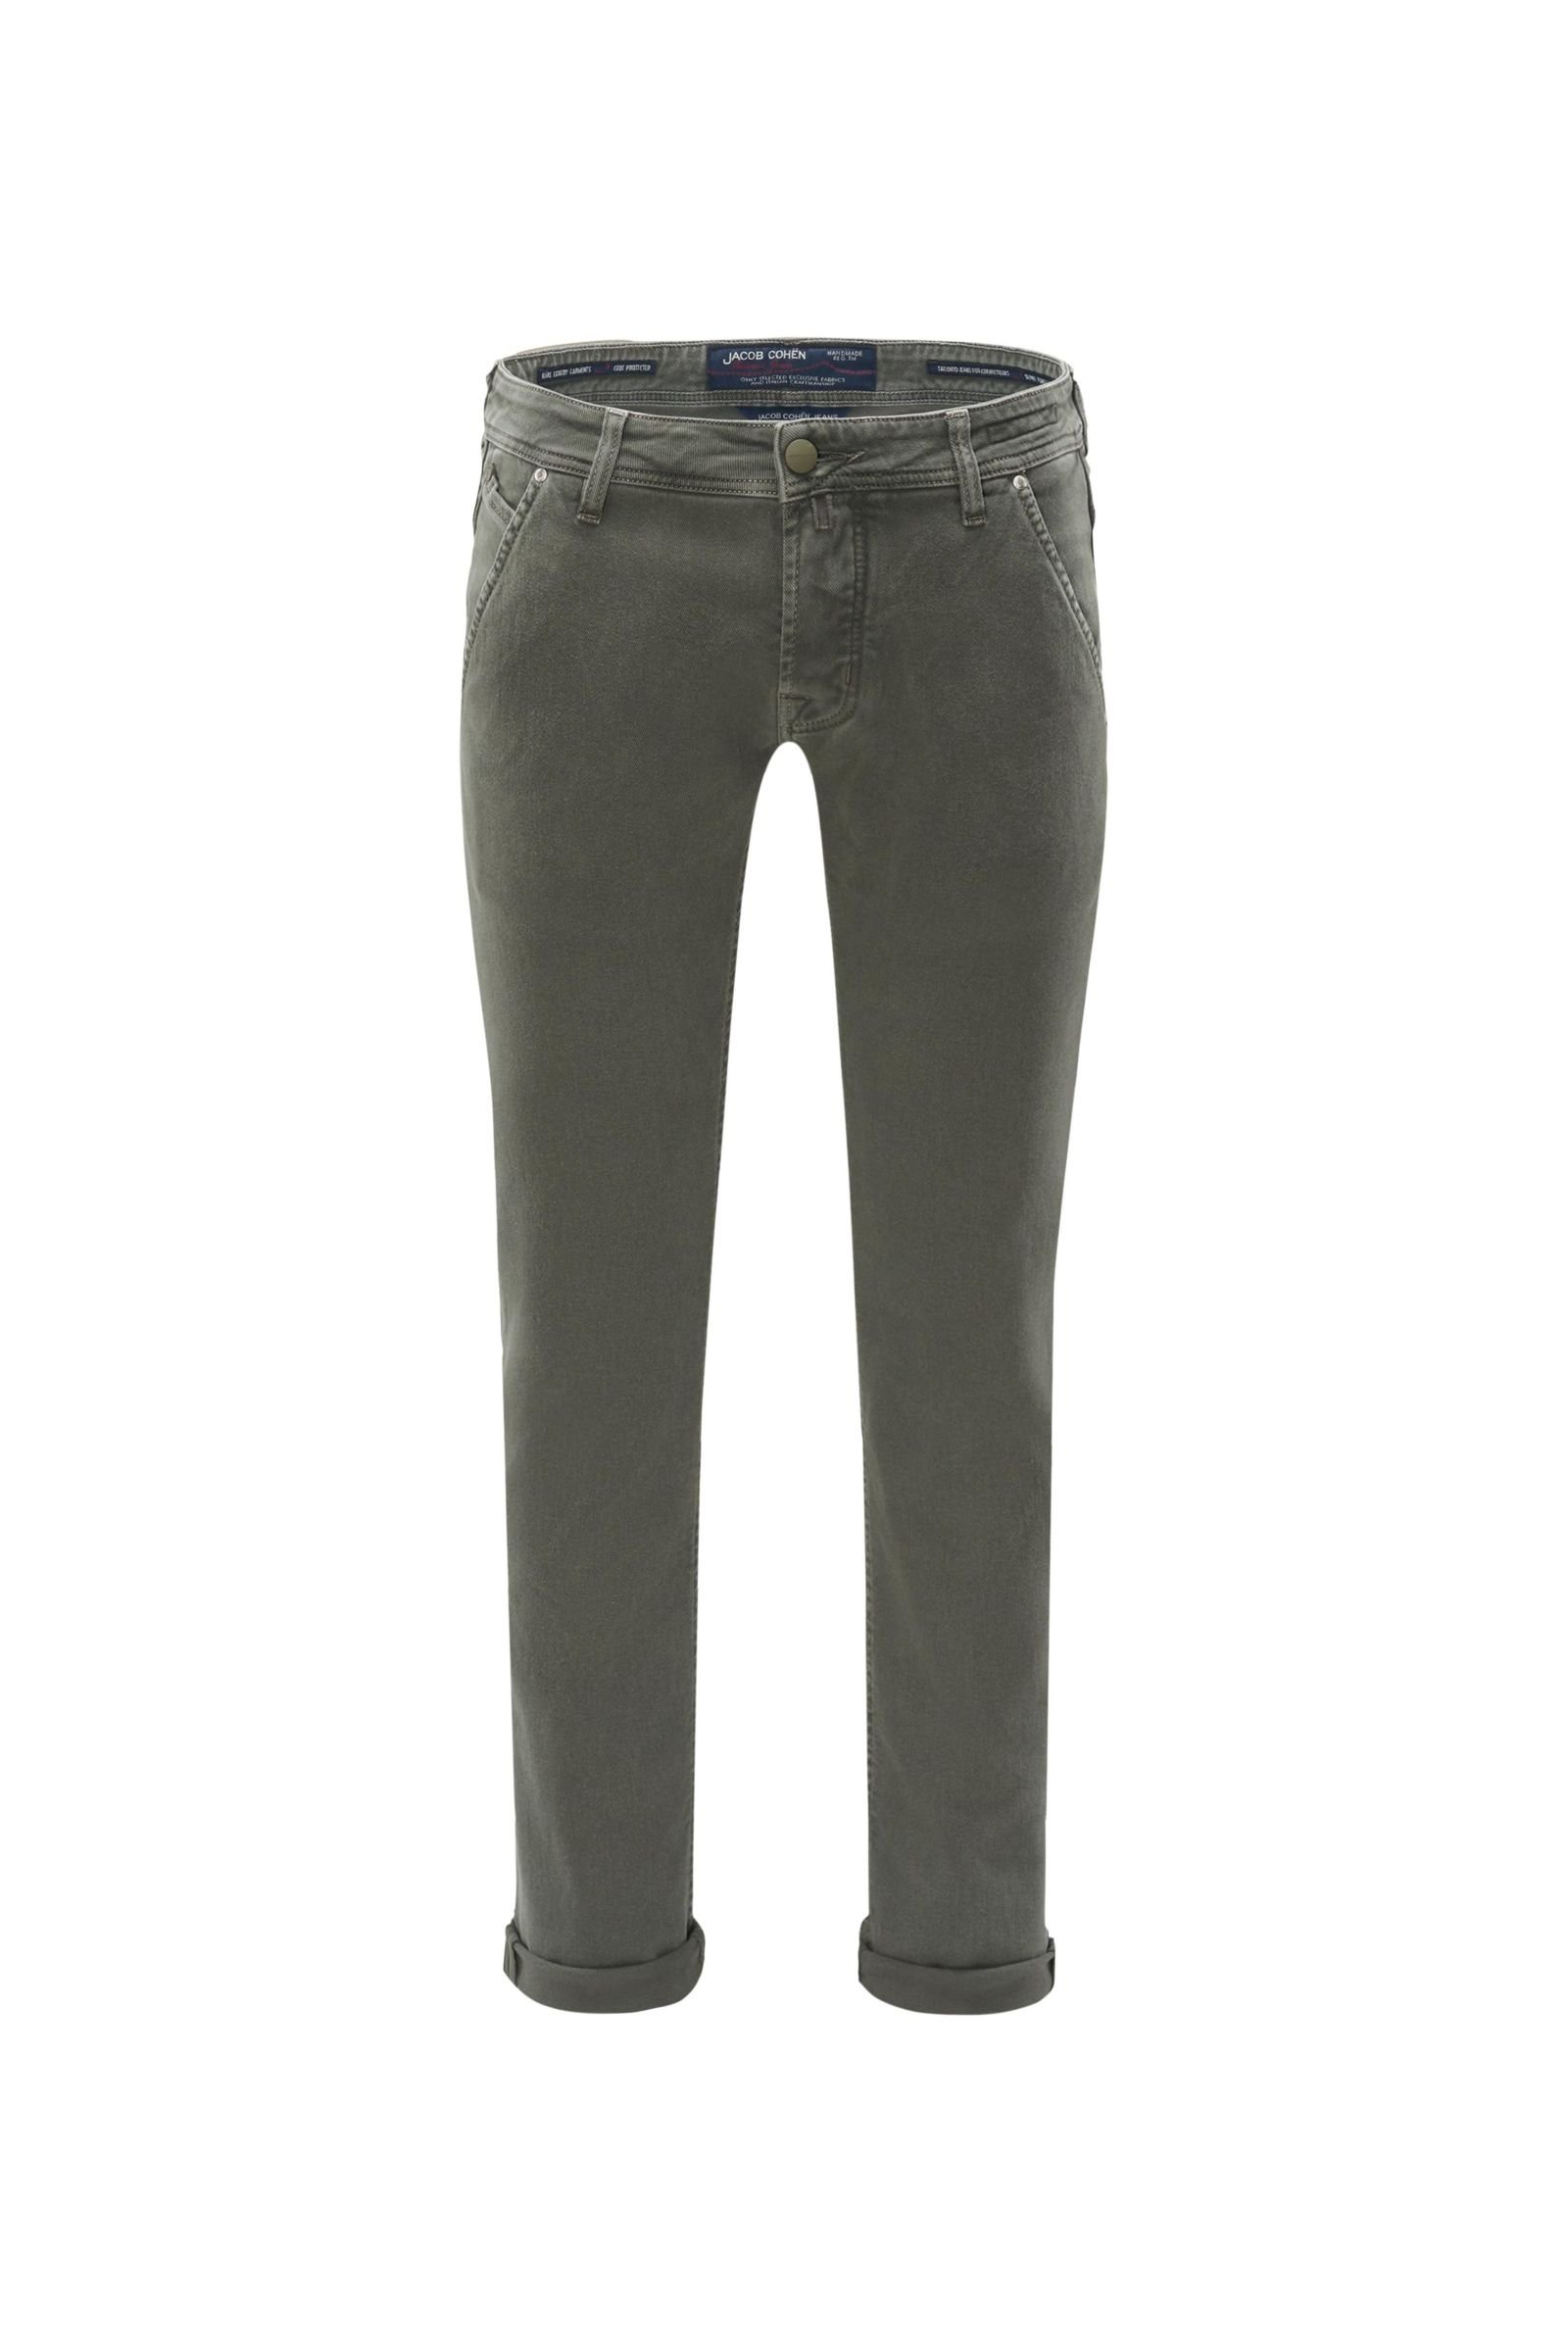 Cotton trousers 'J613 Comfort Vintage Slim Fit' olive